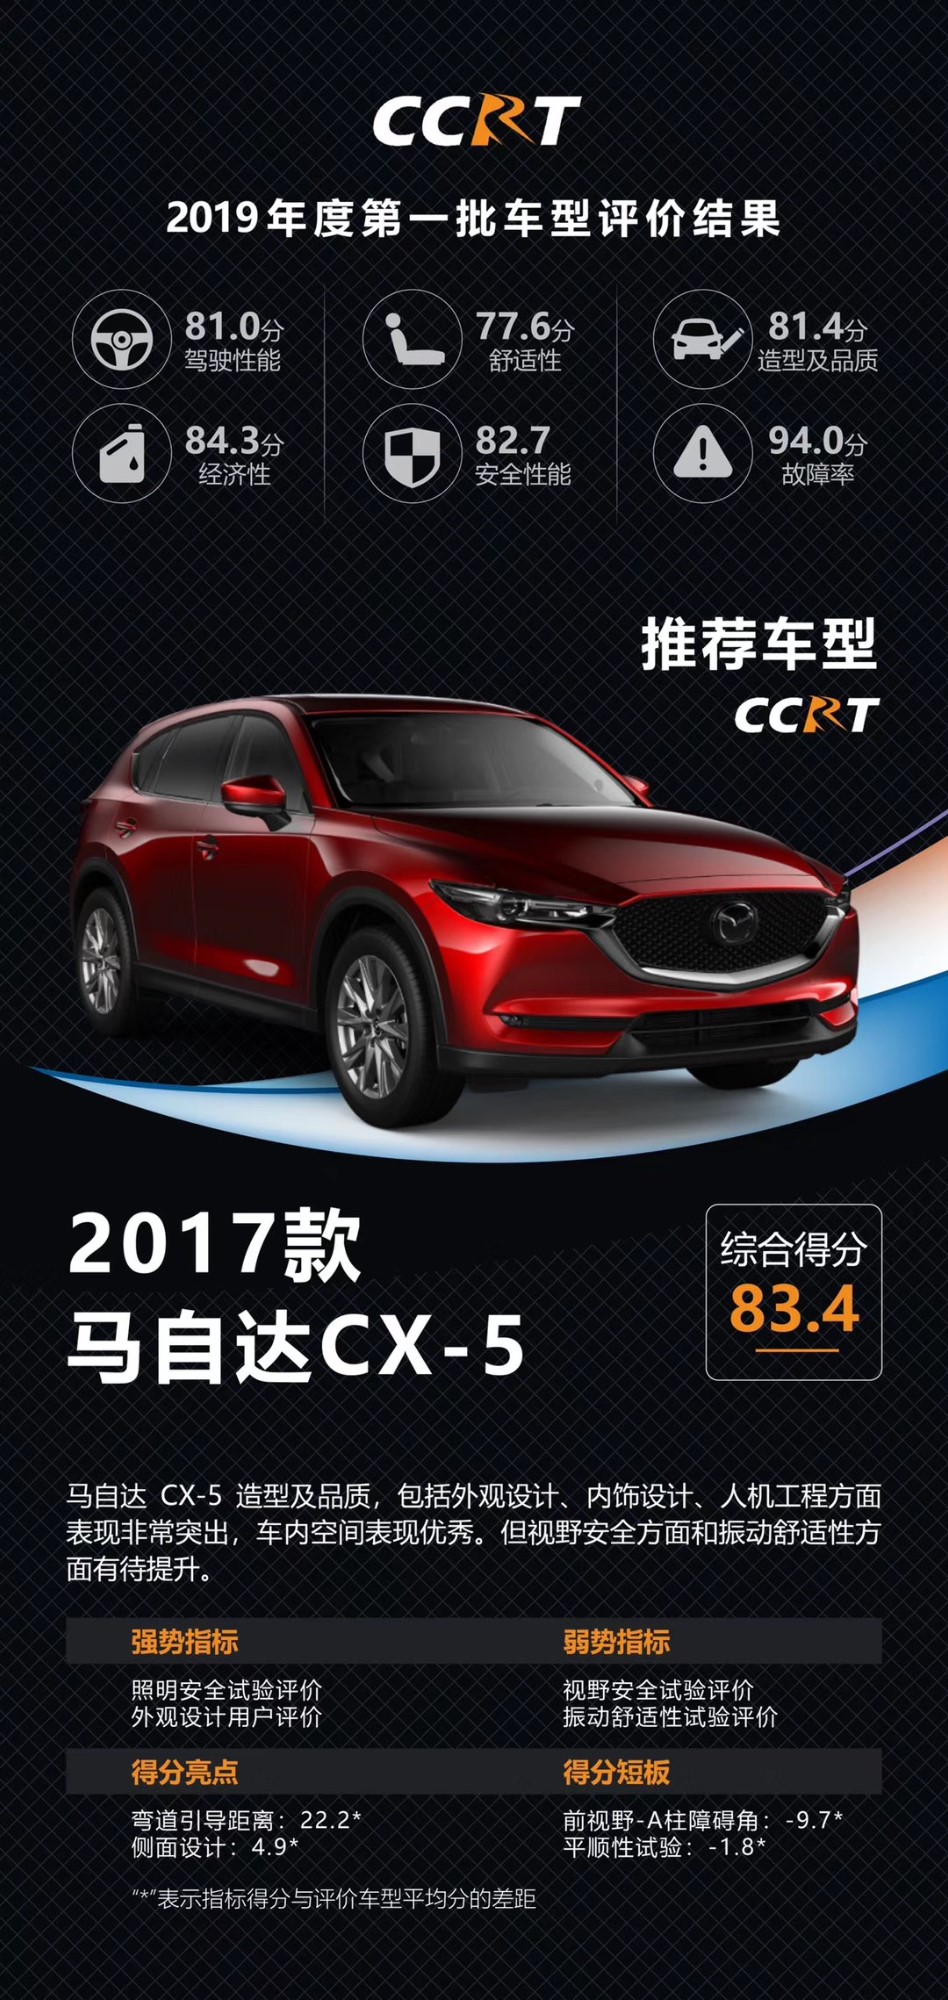 CCRT 2019年度第一批车型评价结果发布 CX-5和朗逸获推荐